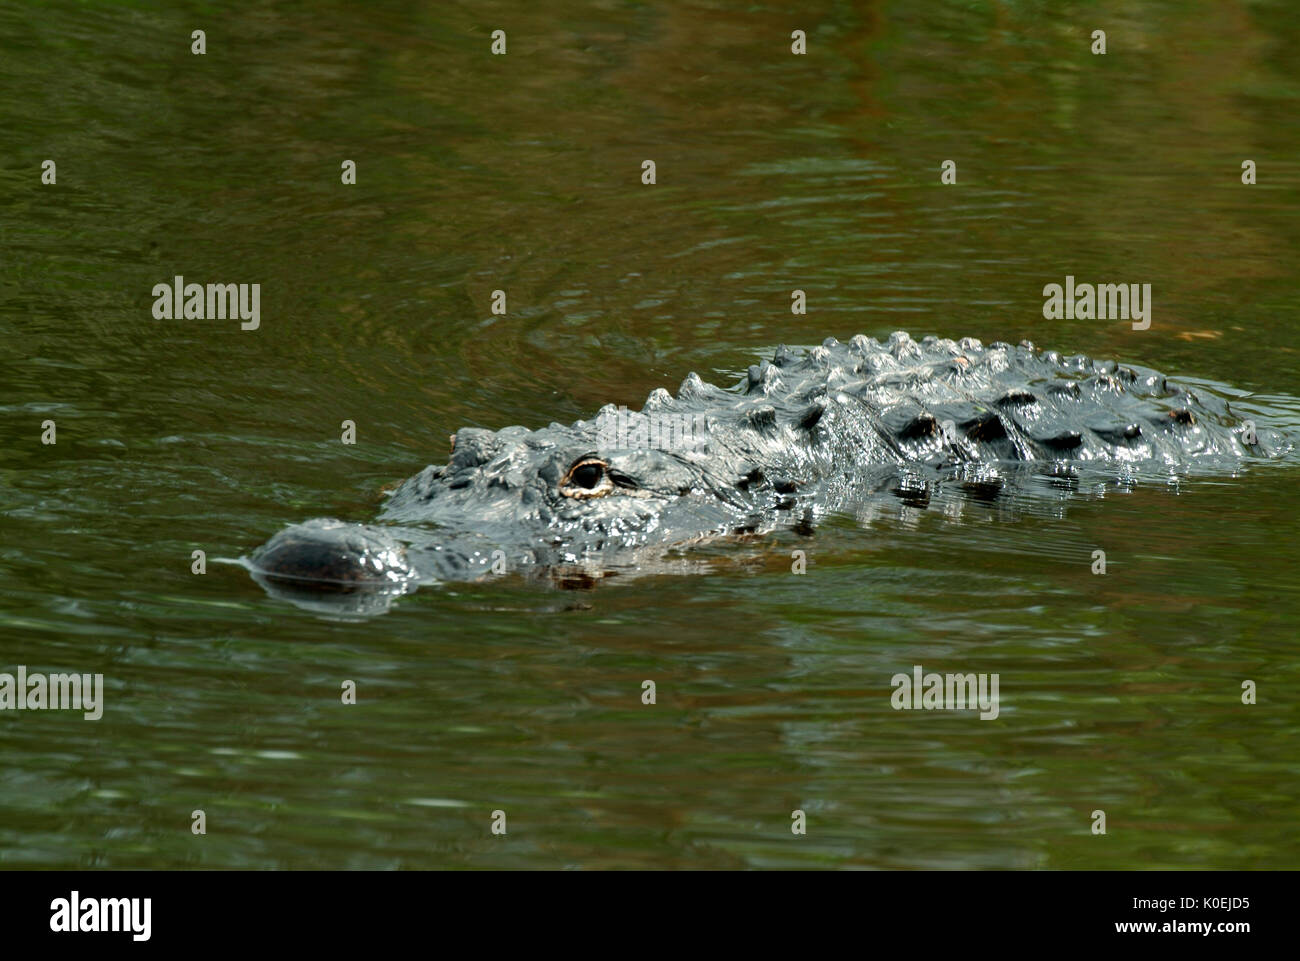 American Alligator, Alligator mississippiensis, swimming in water, Everglades National Park, predator Stock Photo